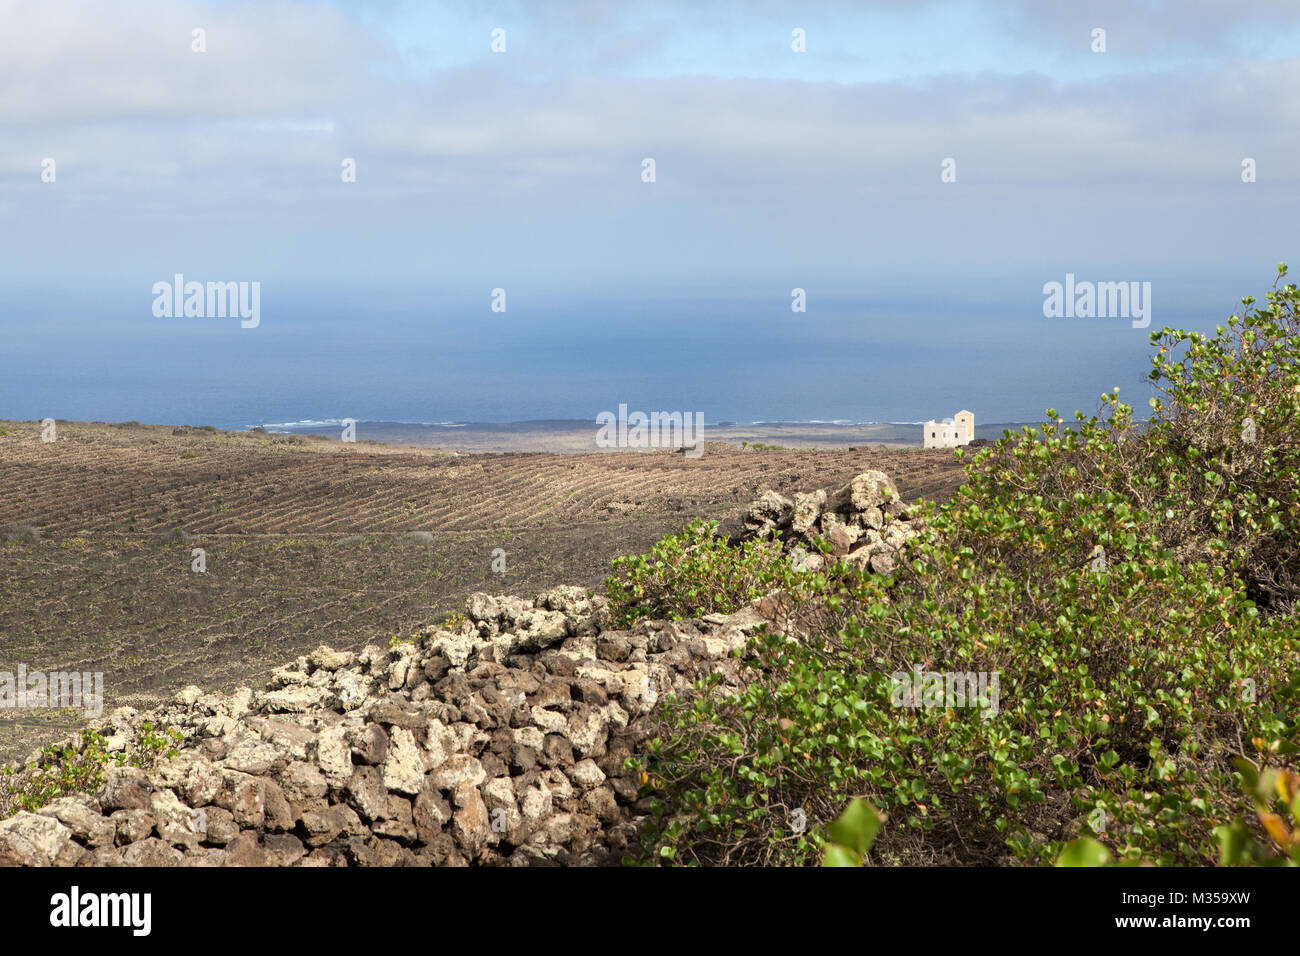 Yé, Haría, Lanzarote, Espagne : une vue sur la campagne environnante depuis le volcan de la Corona, vieux mur de pierre, vignobles et l'océan Atlantique Banque D'Images